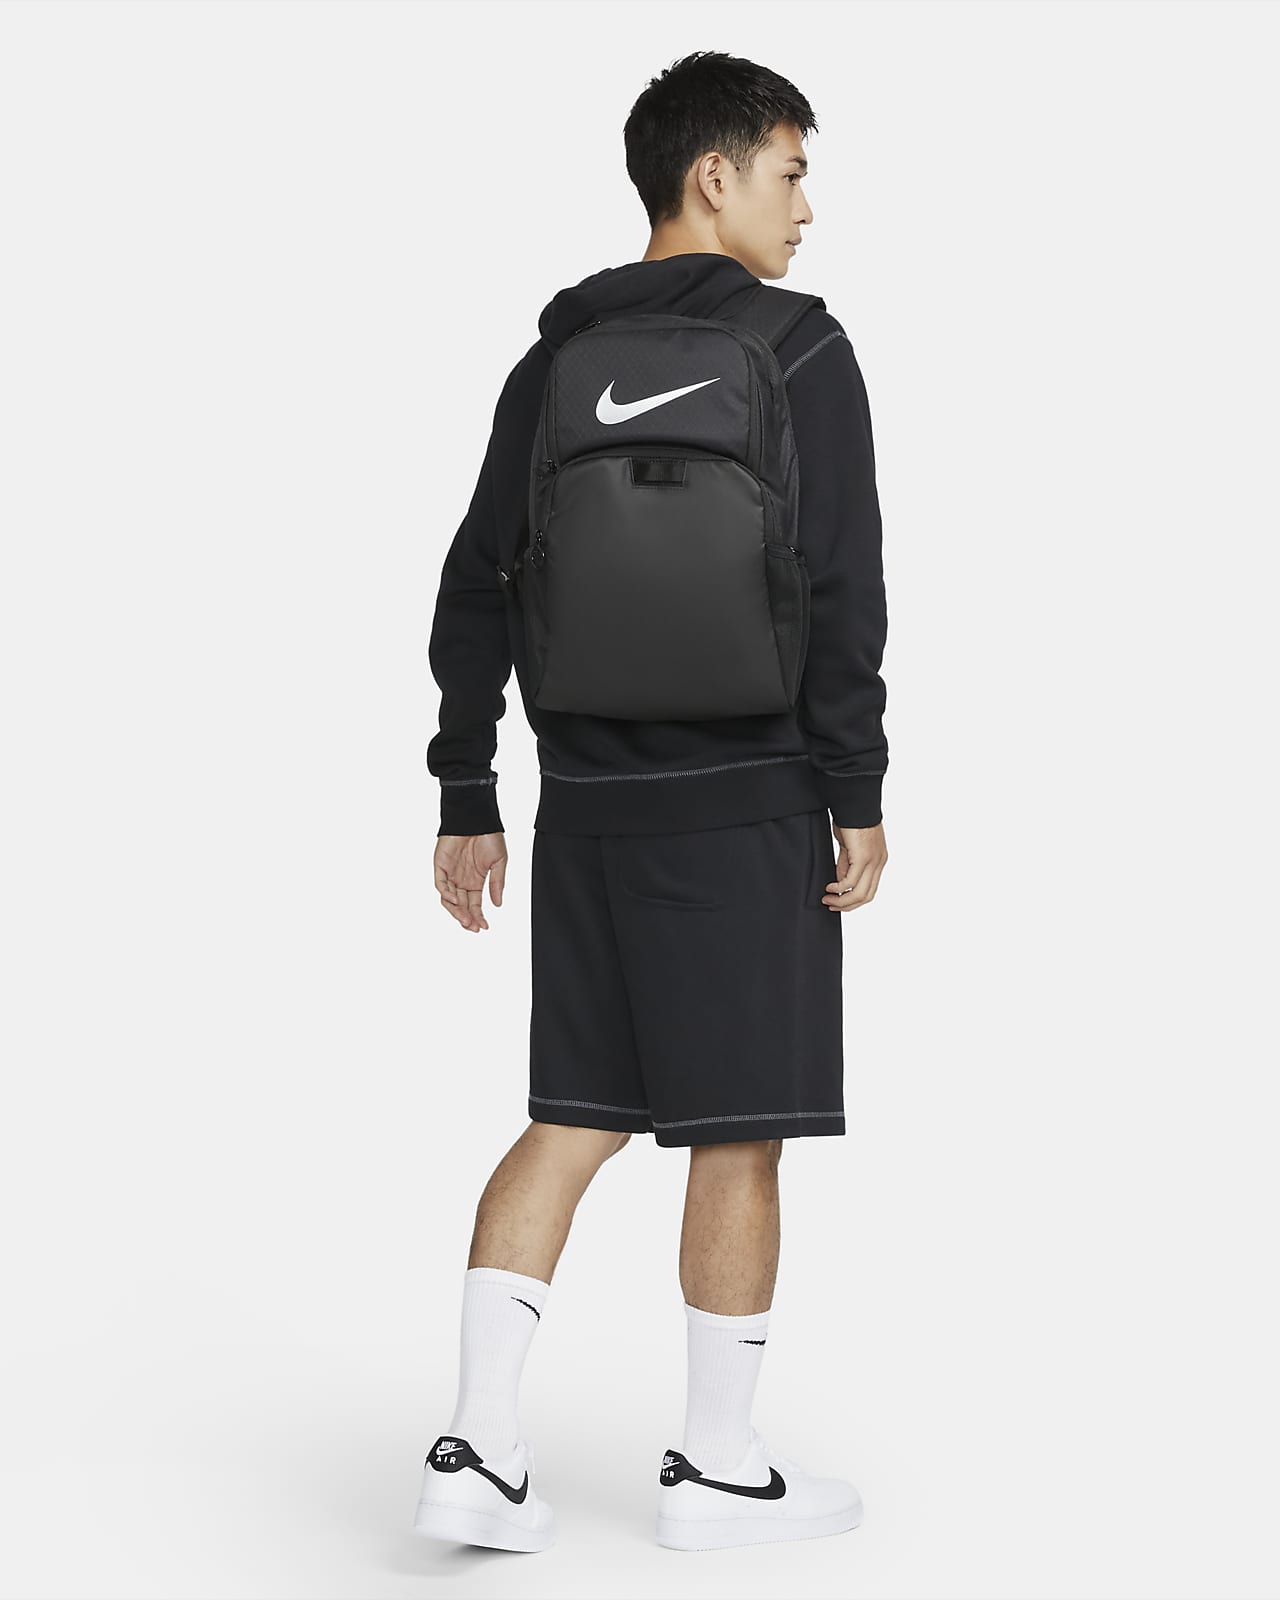 Tennis Backpack Nike Brasilia Winterized Graphic Training Backpack -  black/black/metalic silver, Tennis Zone